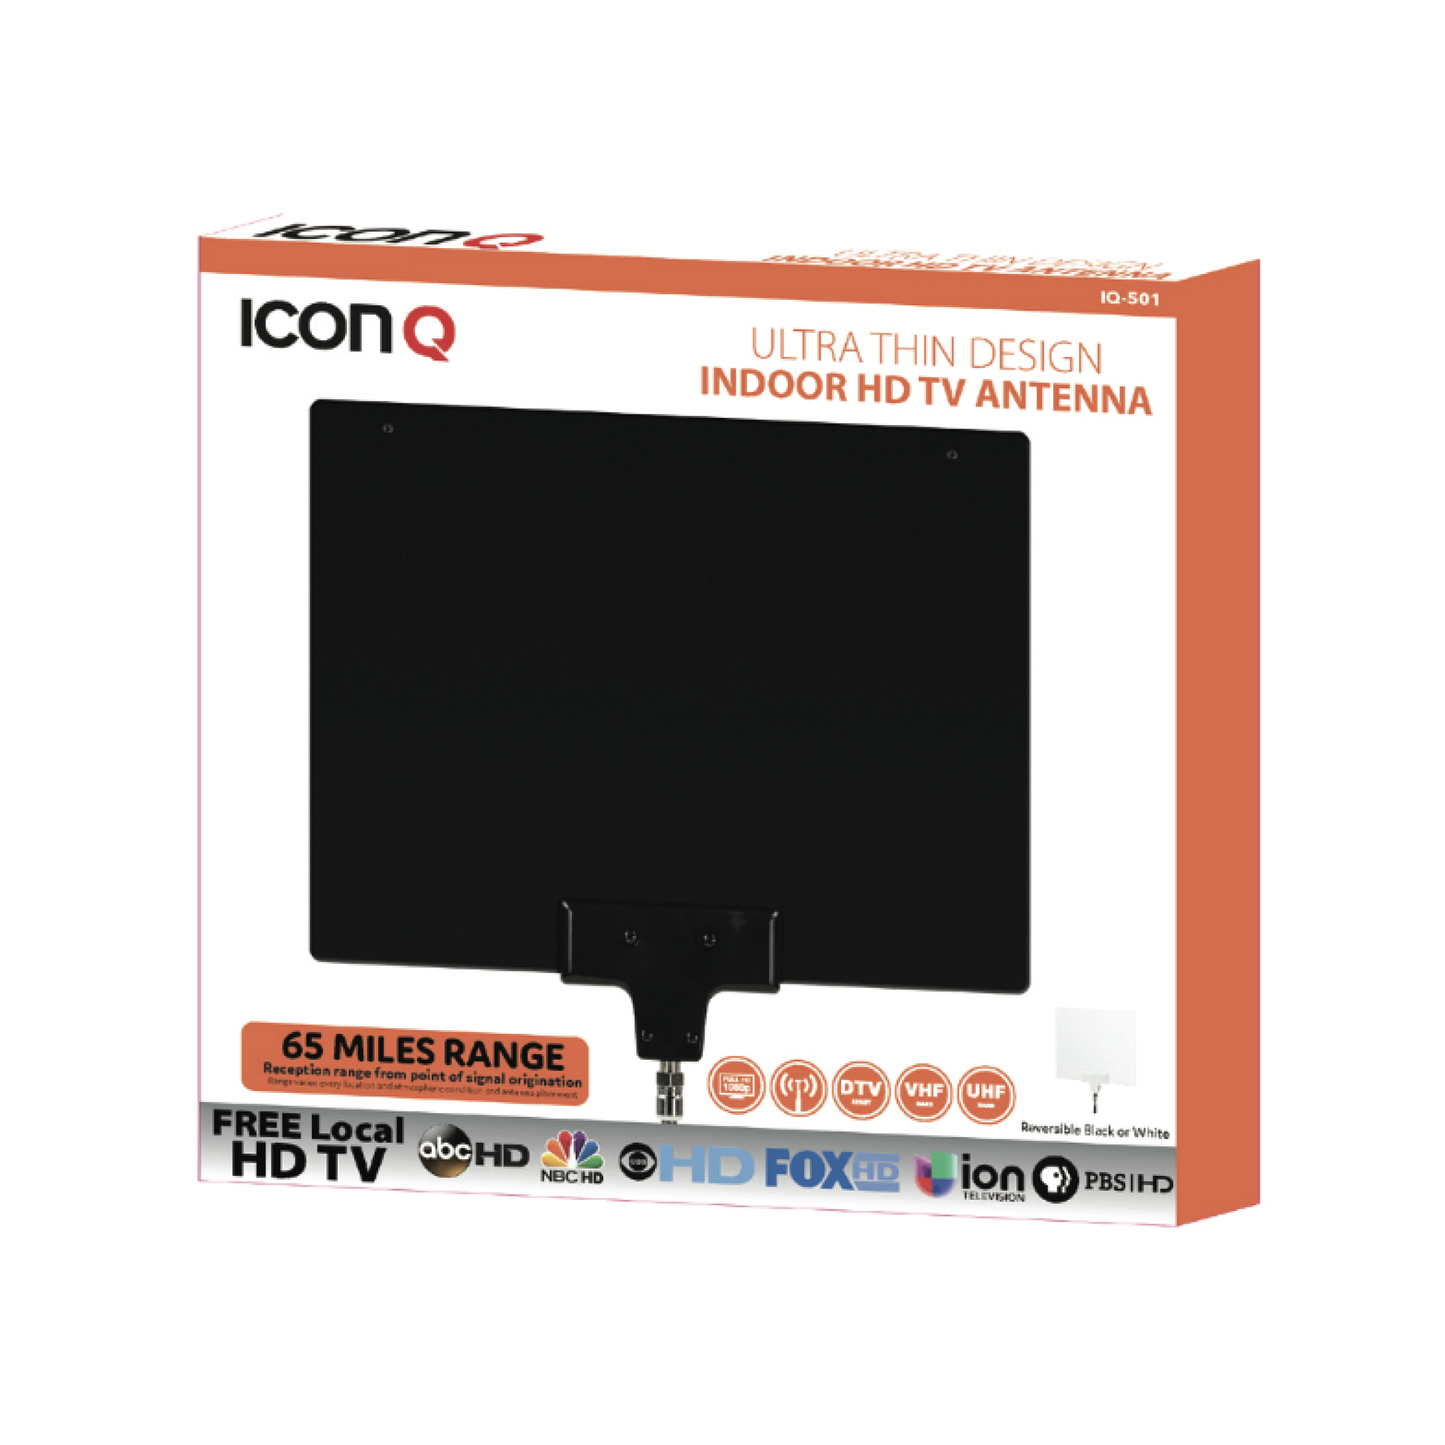 ICONQ Large Ultra Thin Indoor HD TV Antenna (IQ-501) - 65 Mile Range